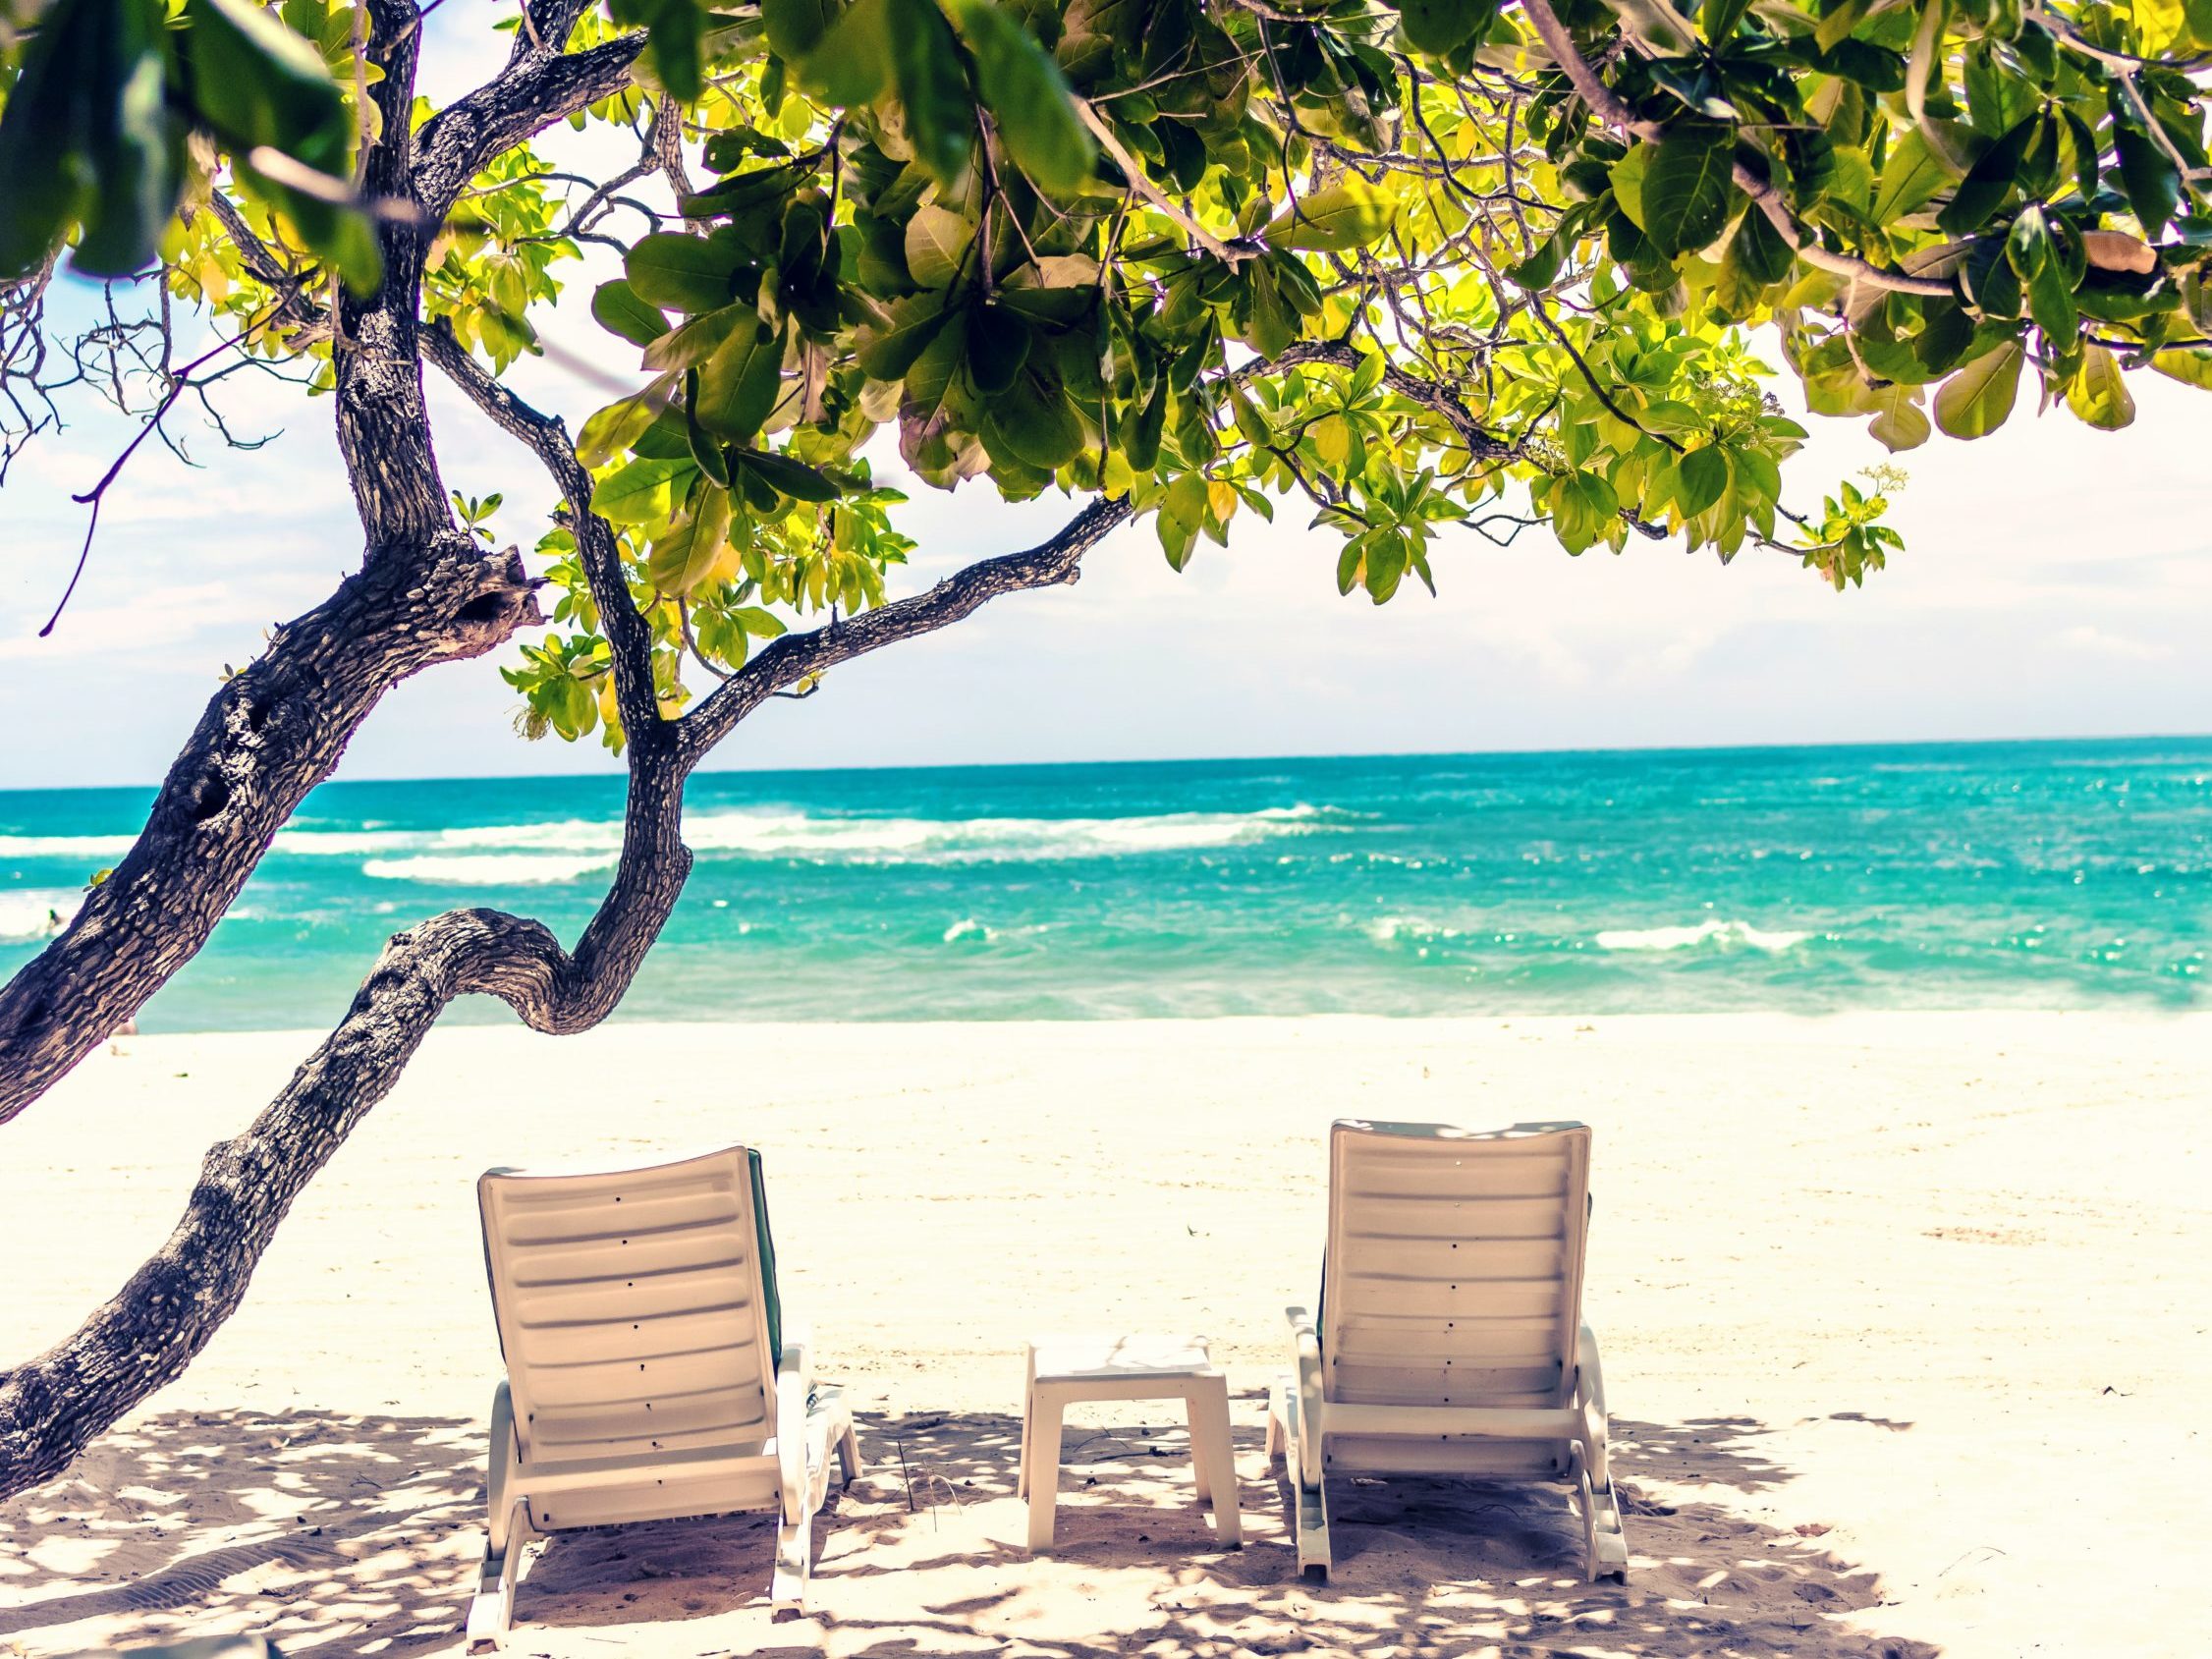 Vacation Rental Marketing News and Tips